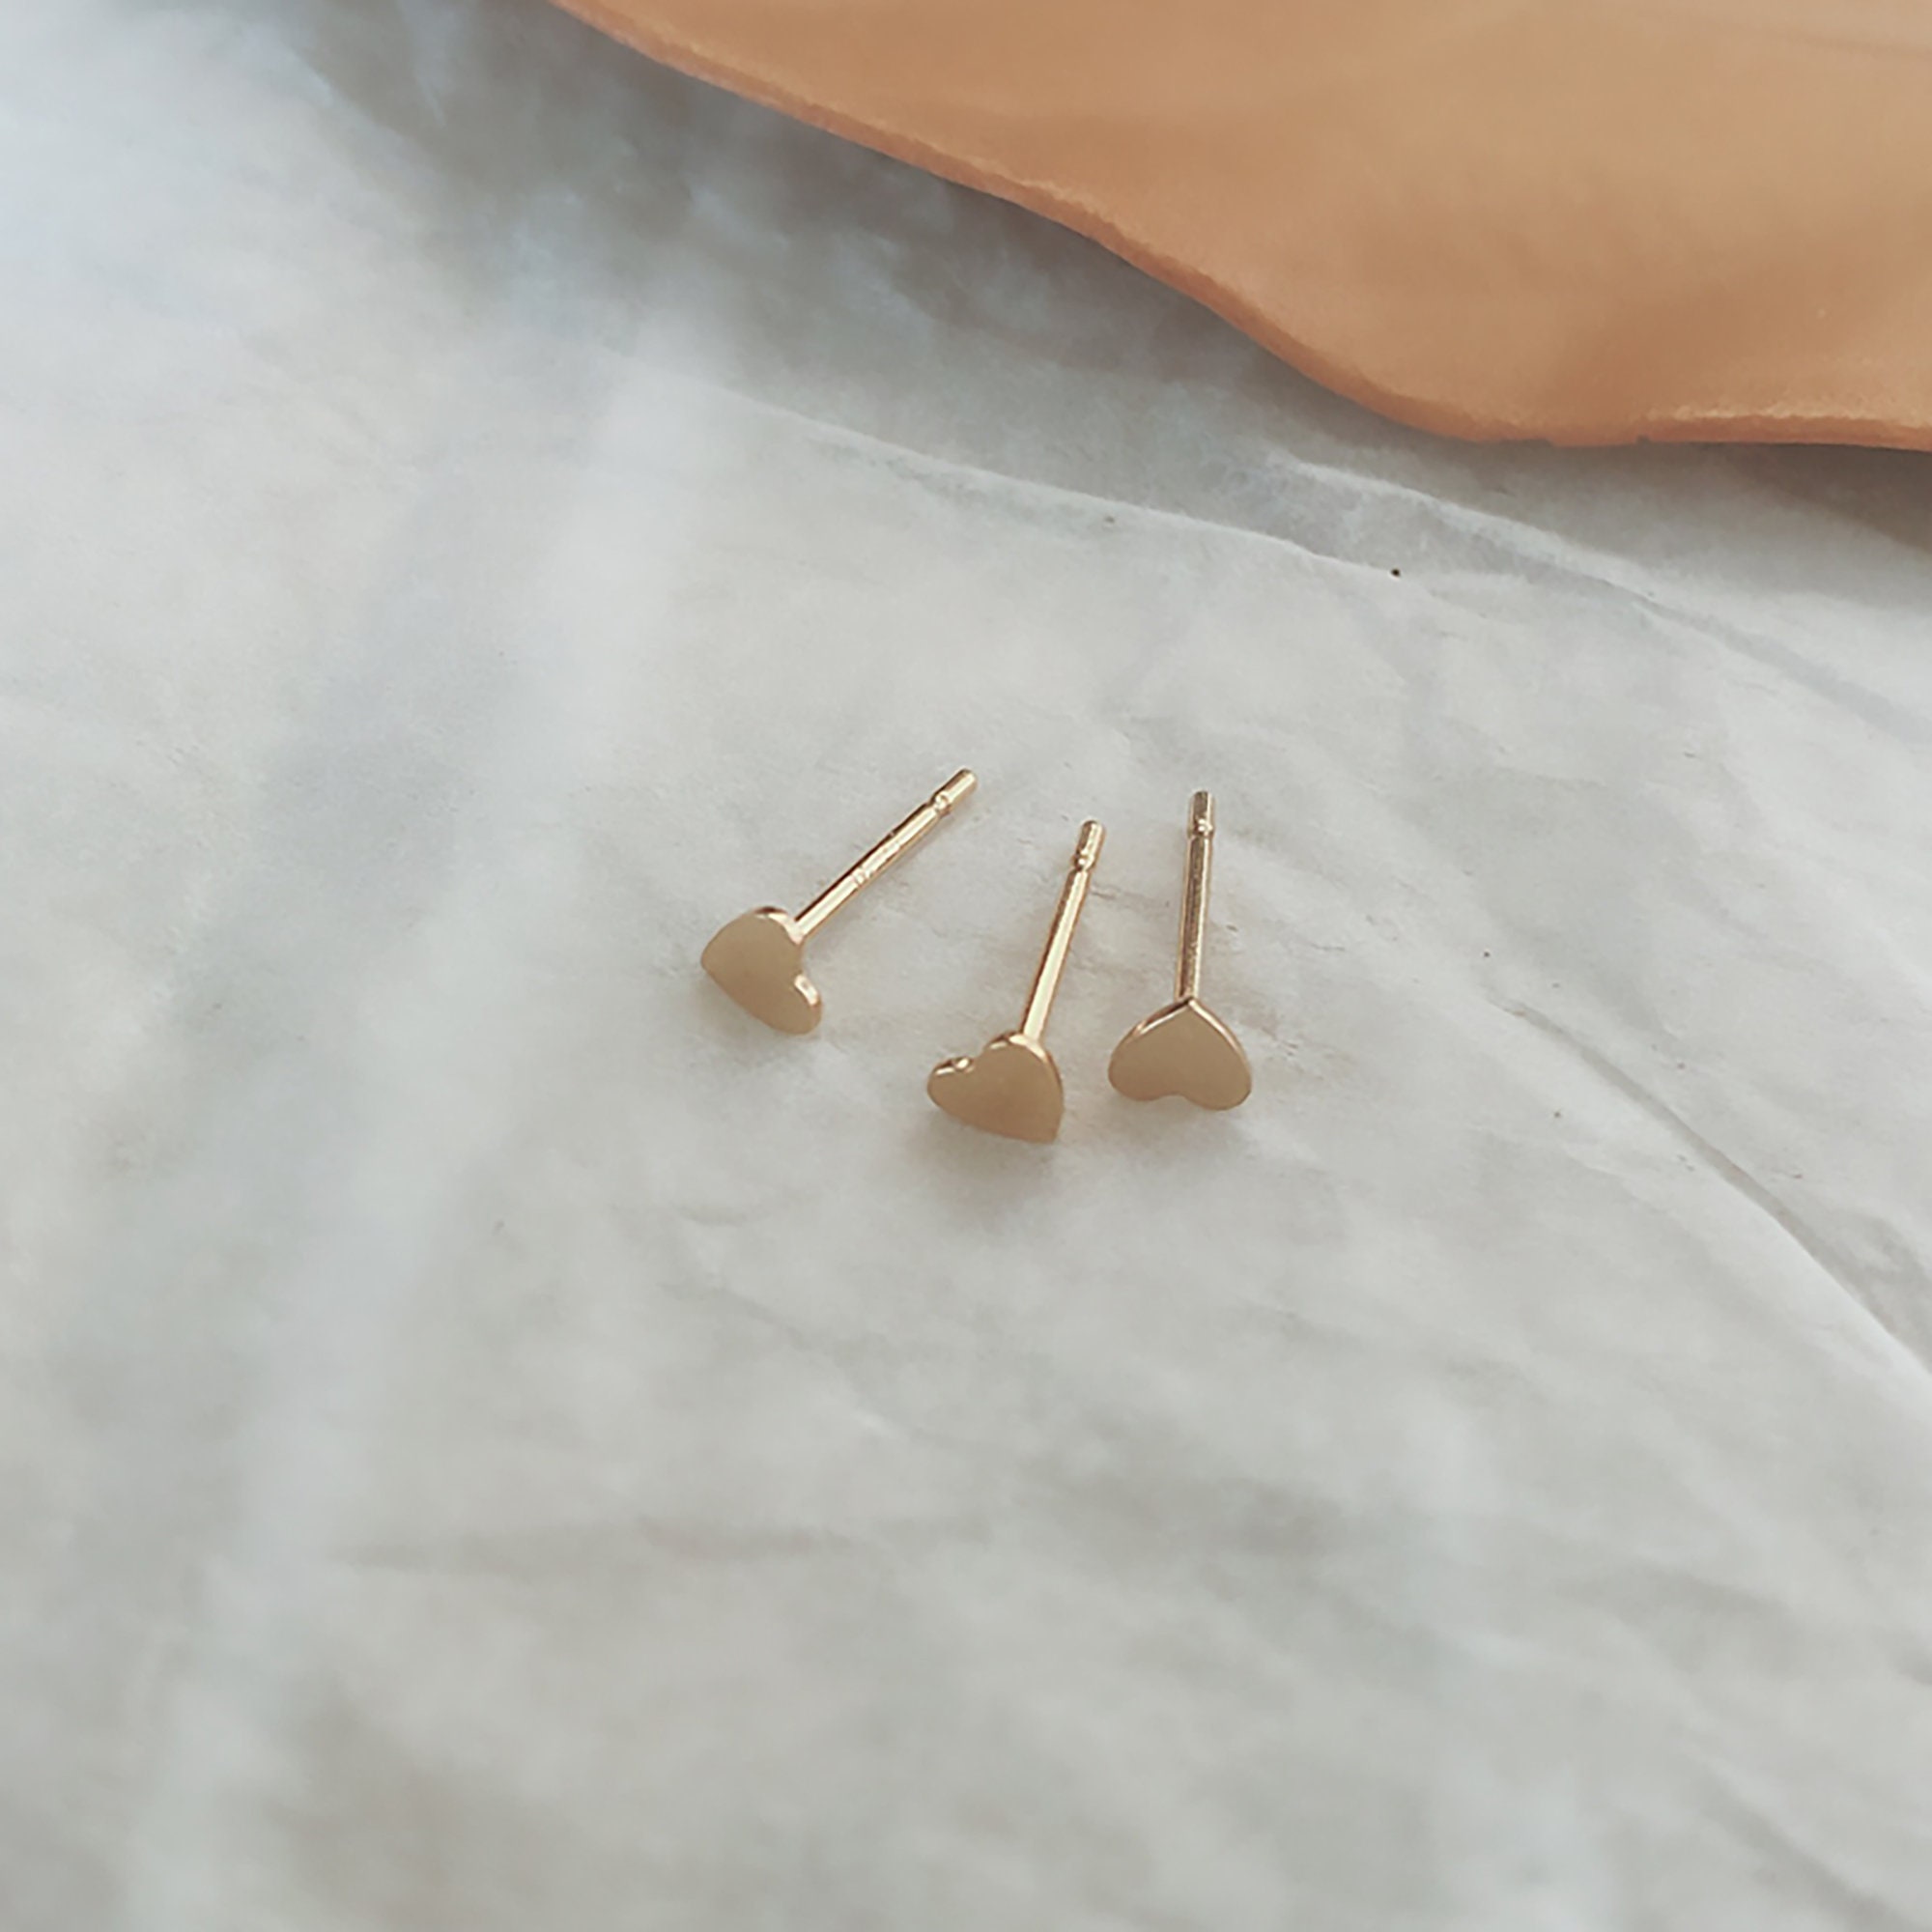 Pair Dainty Small Heart Stud Earrings Tiny Studs 14K Yellow | Etsy